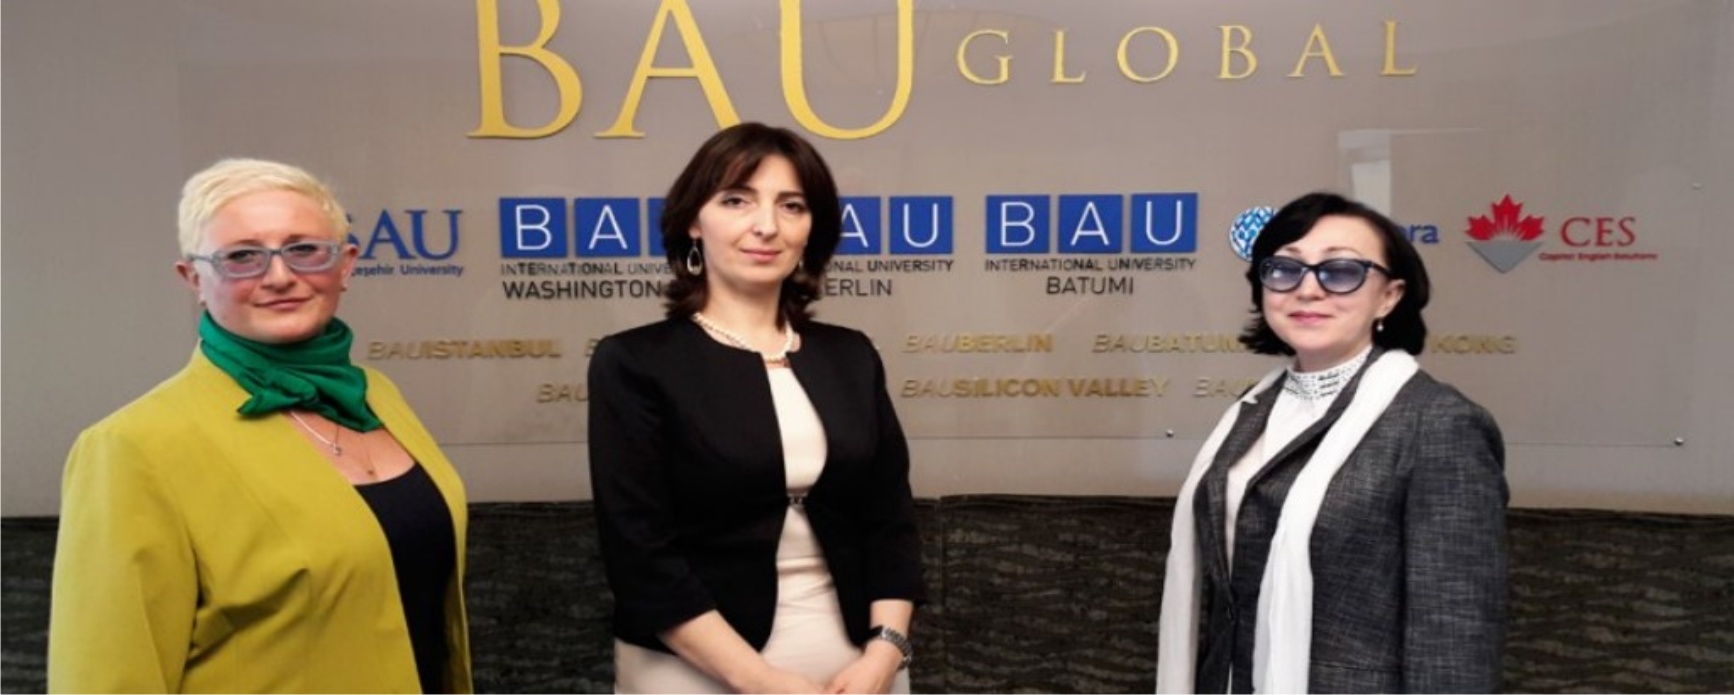 BAU Batumi International University 011